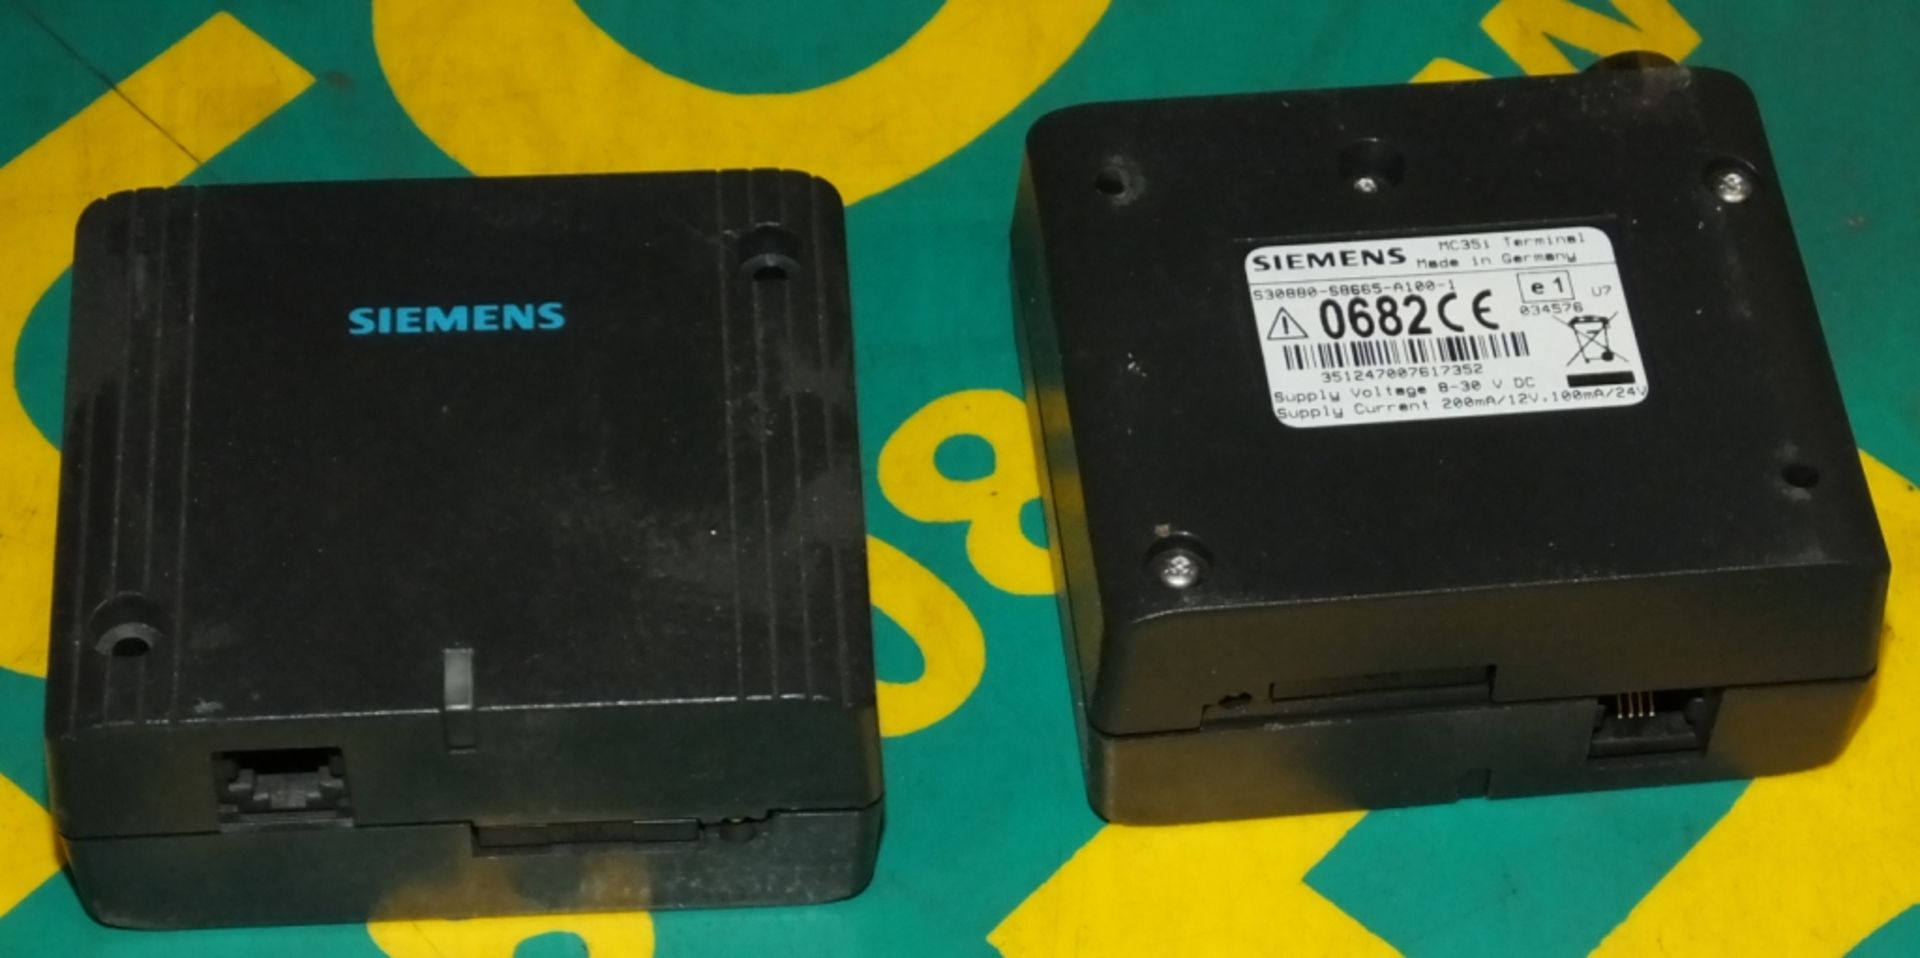 Siemens Wireless modems - Image 3 of 3